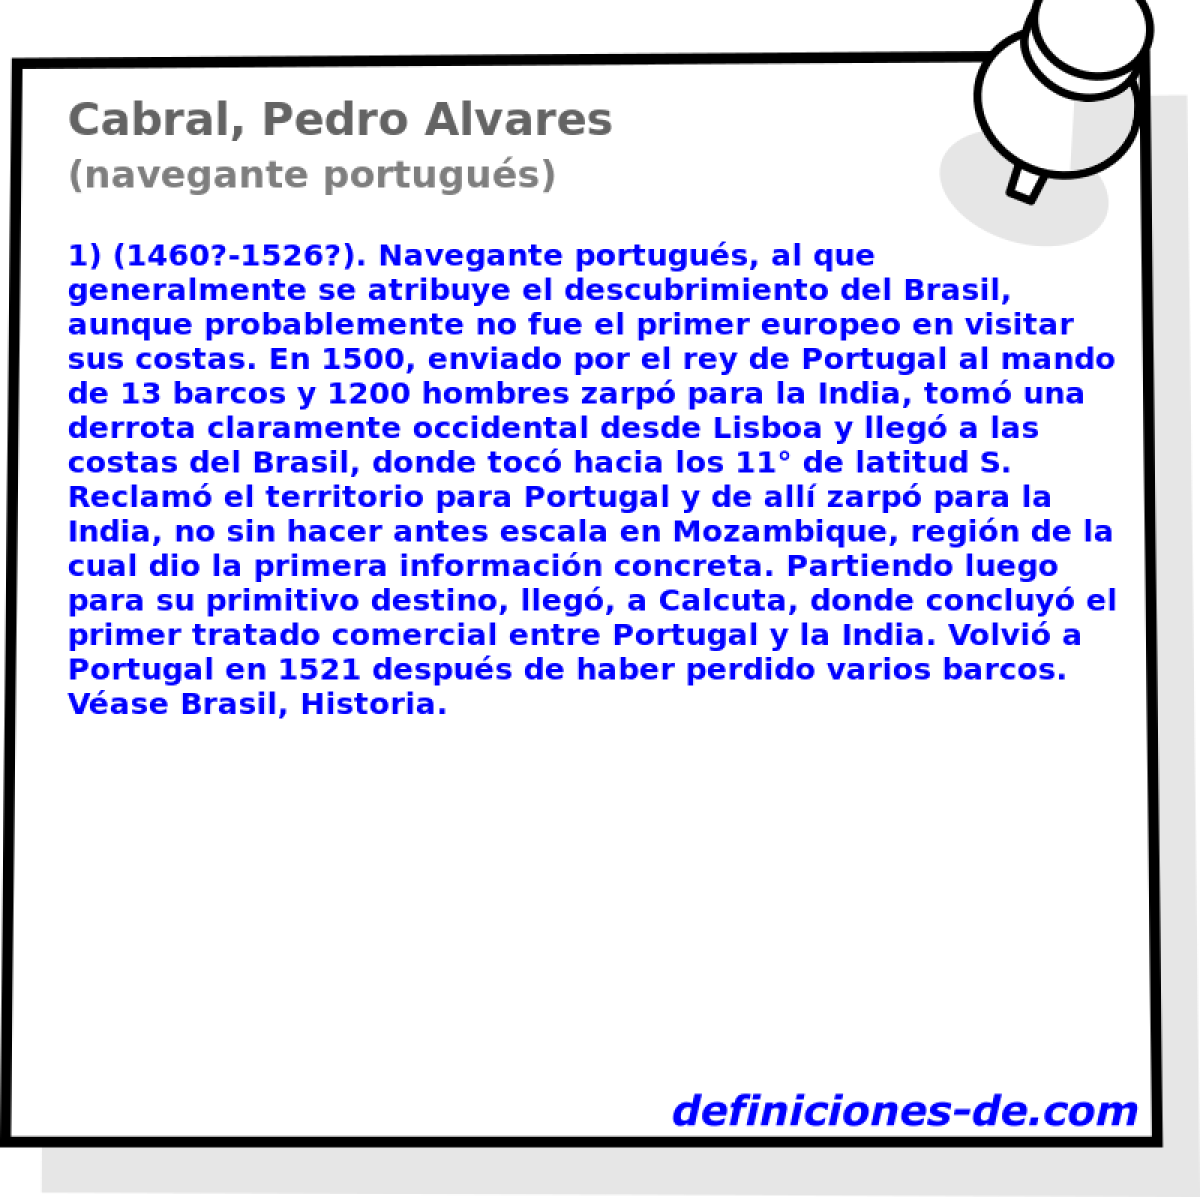 Cabral, Pedro Alvares (navegante portugus)